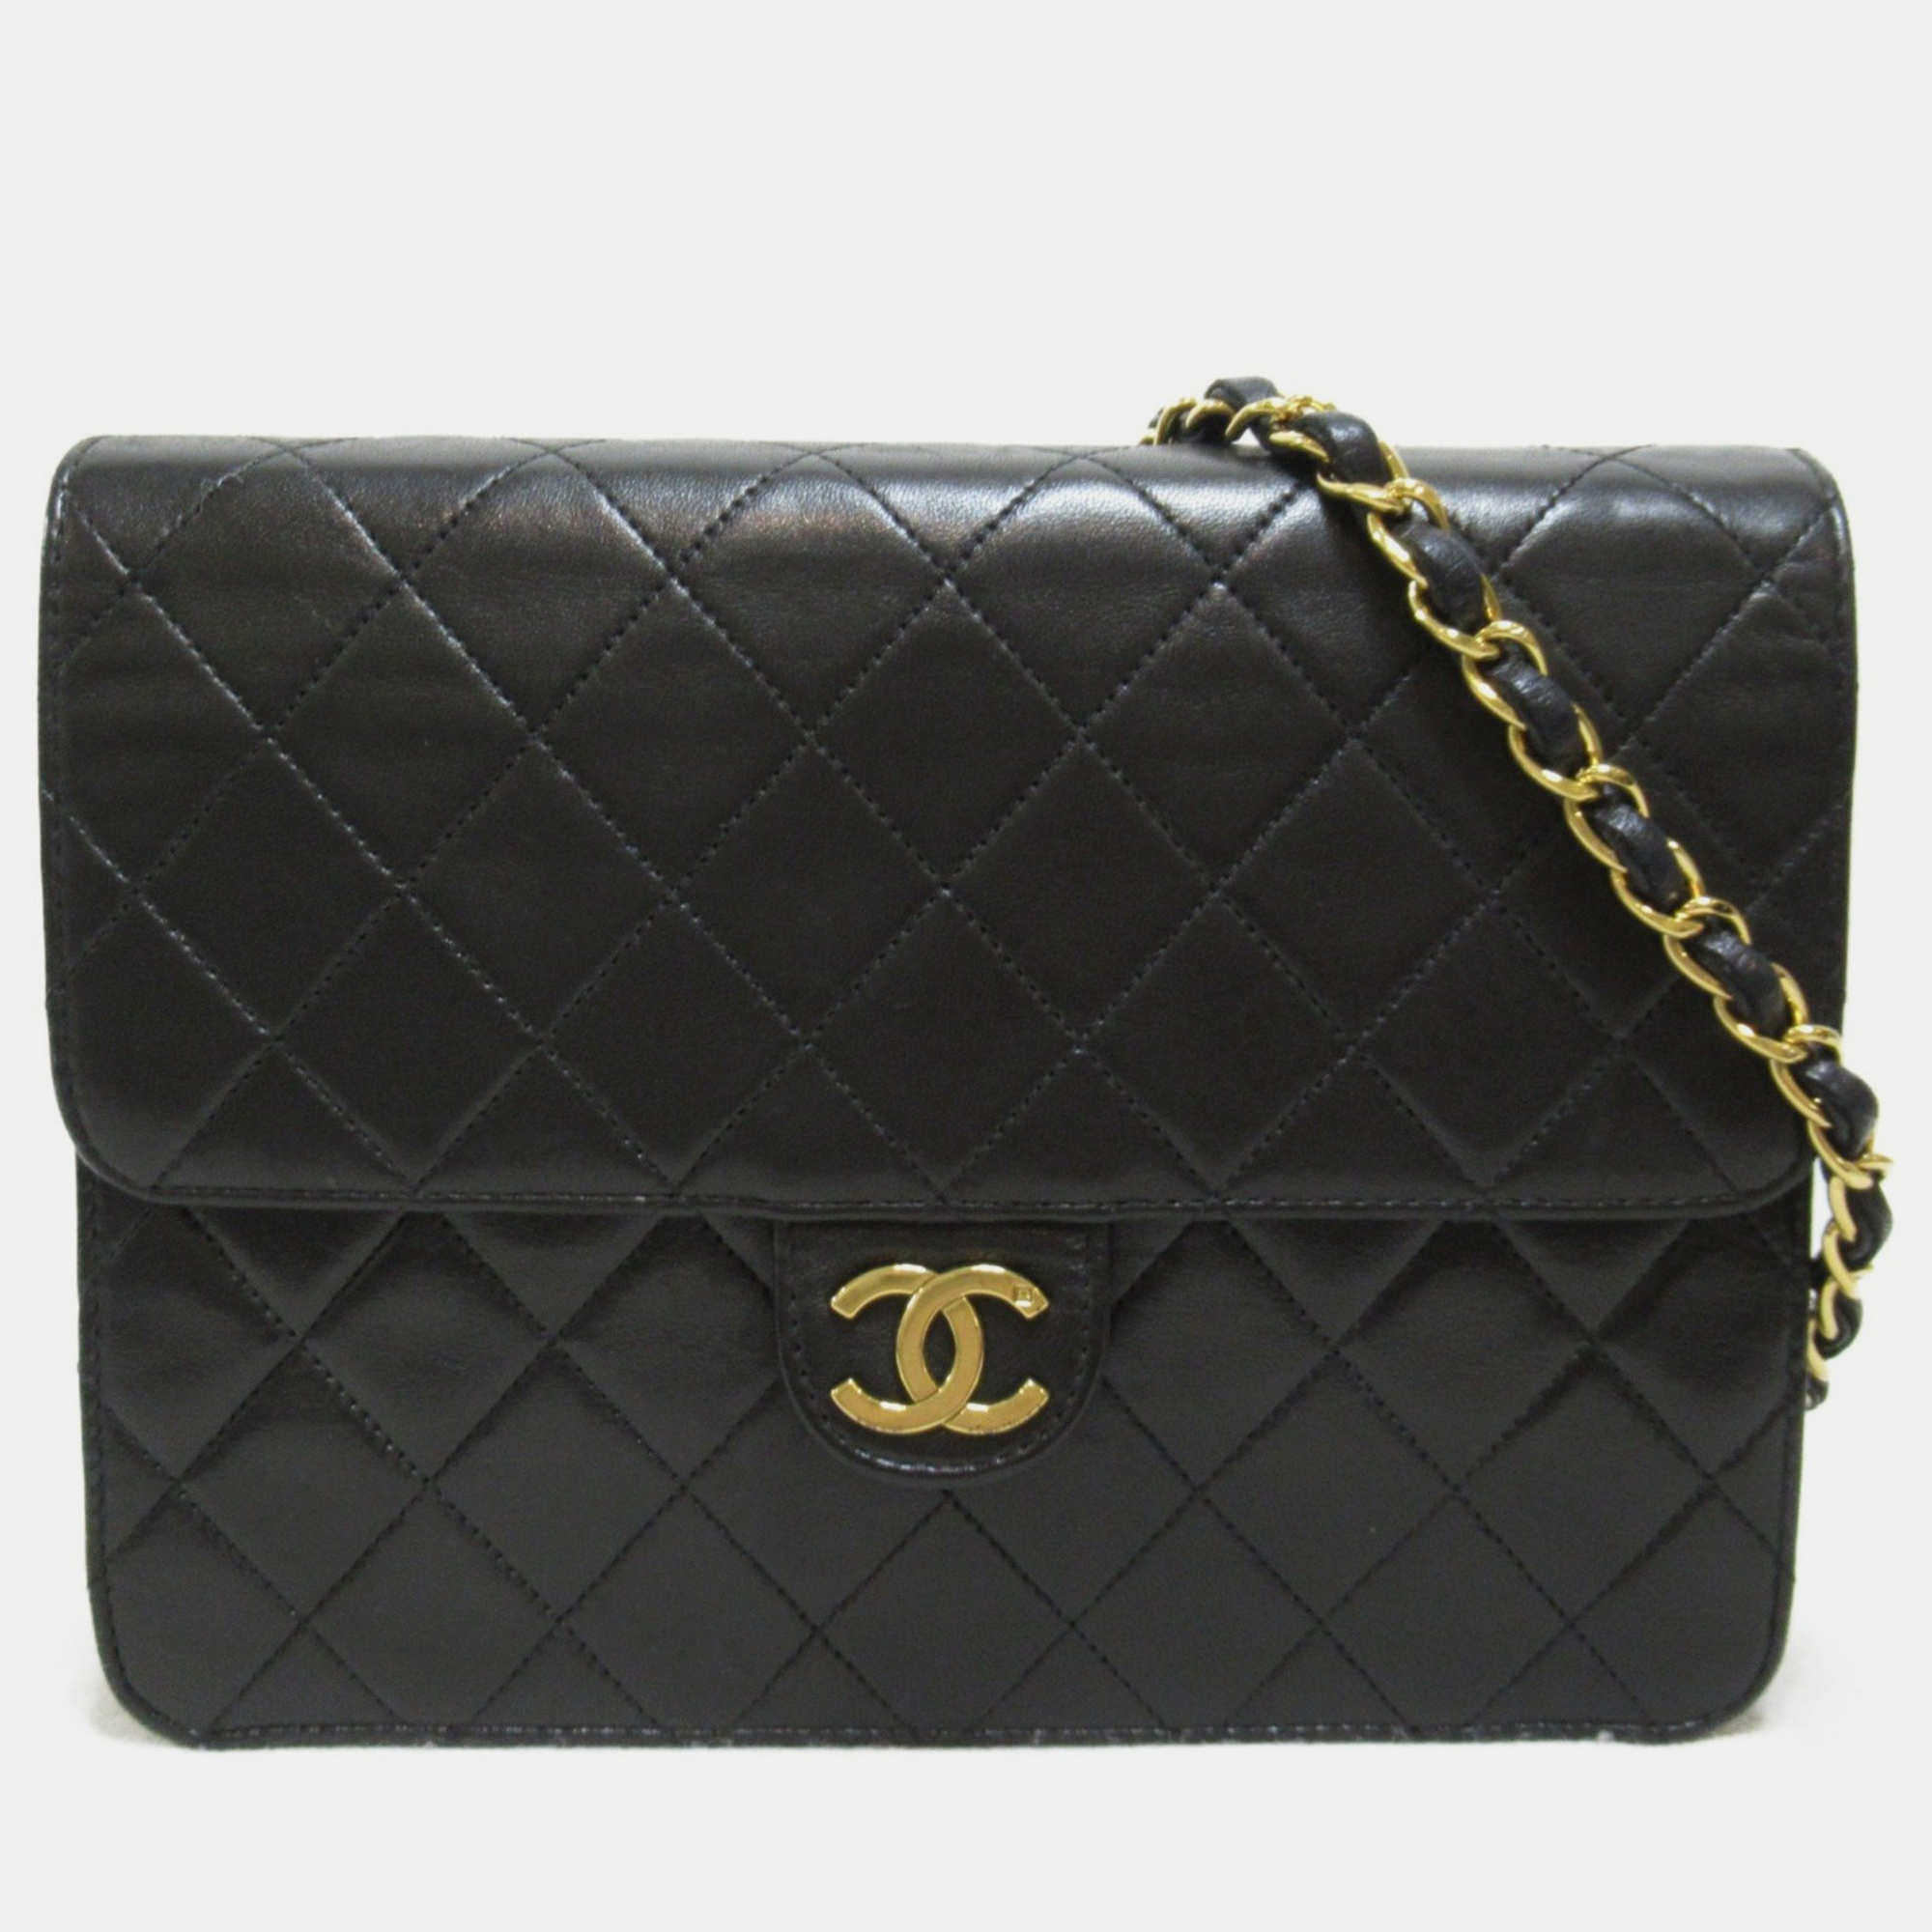 Chanel  lambskin leather large classic single flap shoulder bag